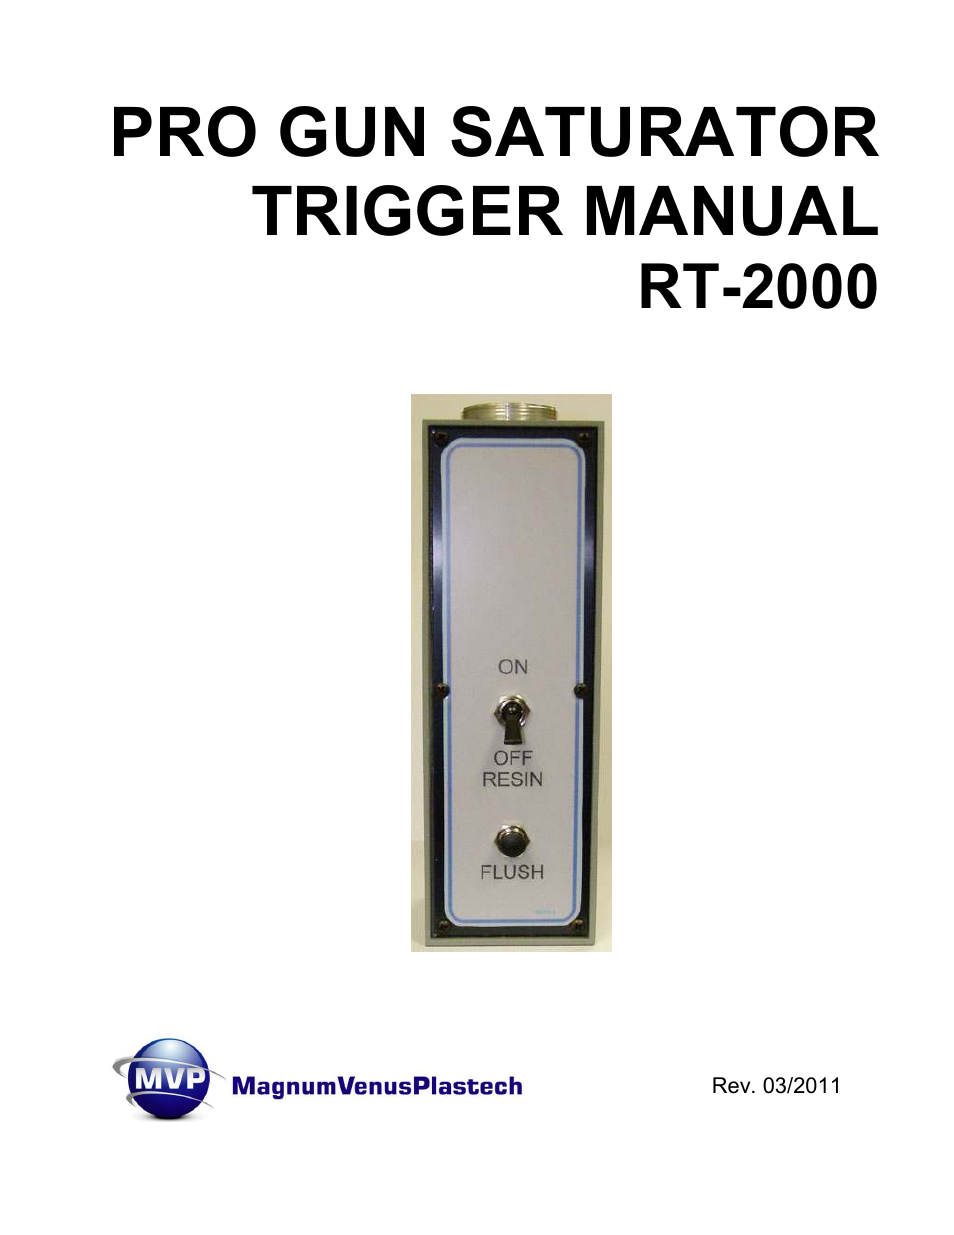 RT-2000 PRO GUN SATURATOR TRIGGER